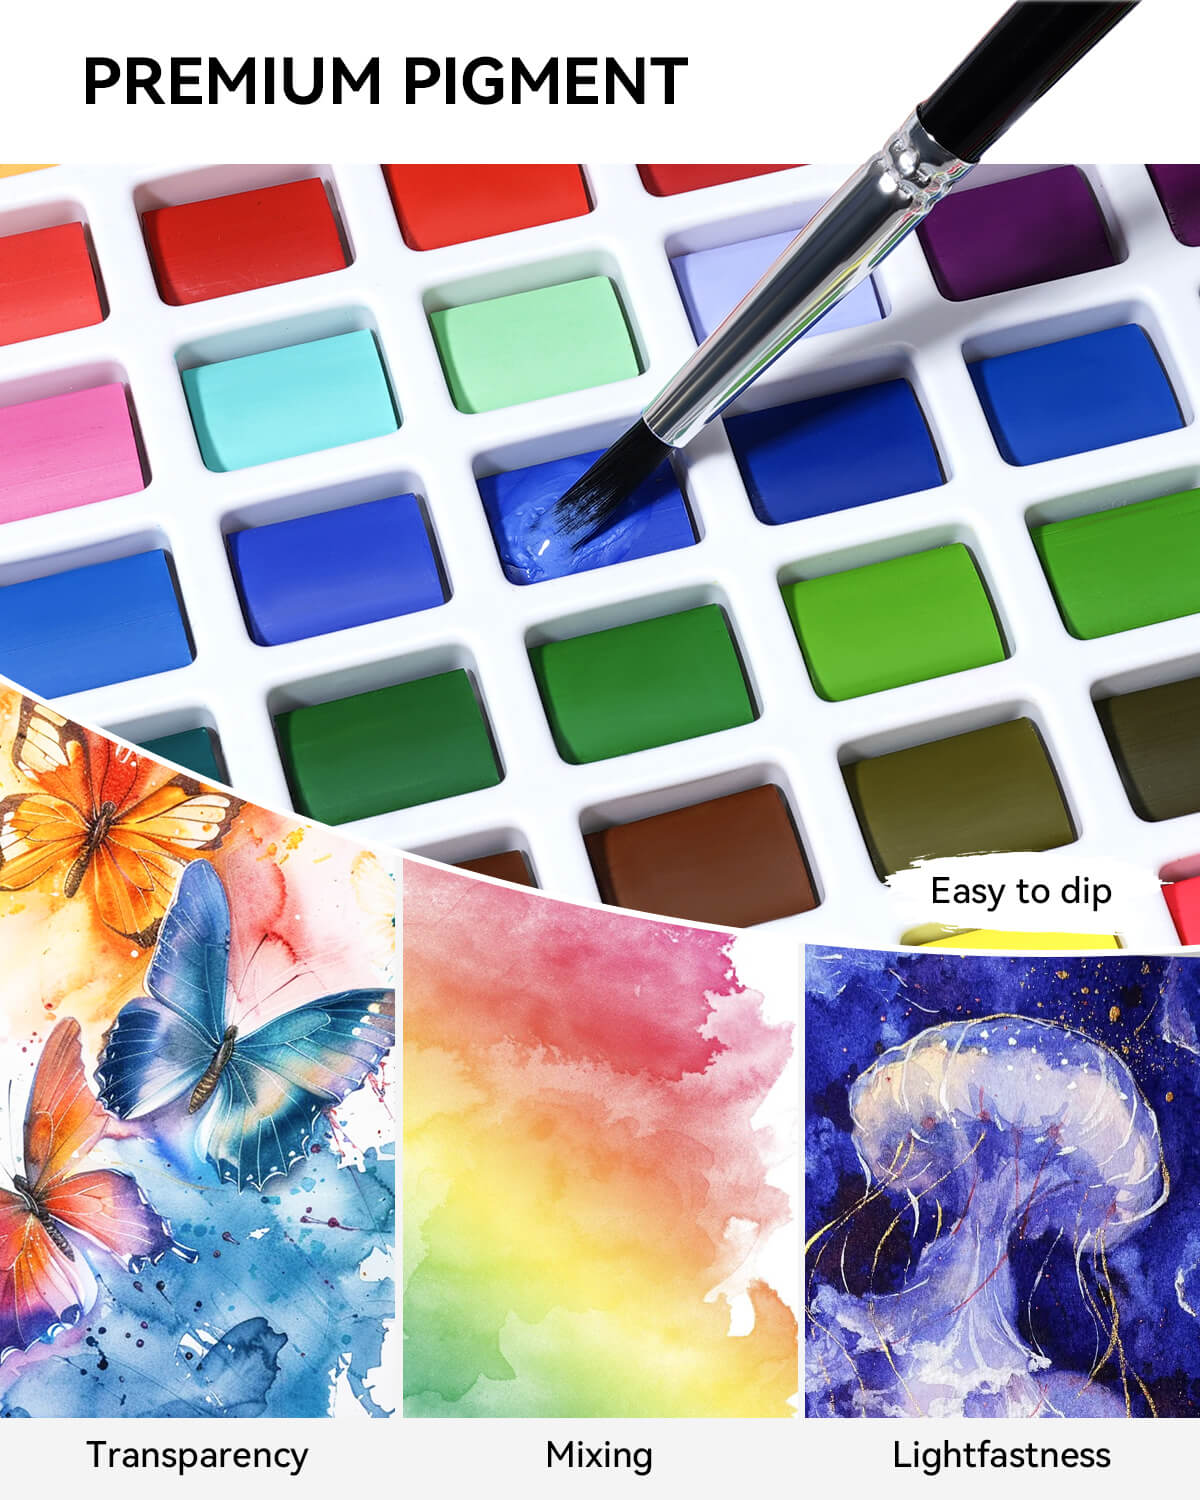 Lightwish Aquarellfarben-Set, 128 Farben, mit Aquarellpapier, Pinsel, Bleistiften, Radiergummis